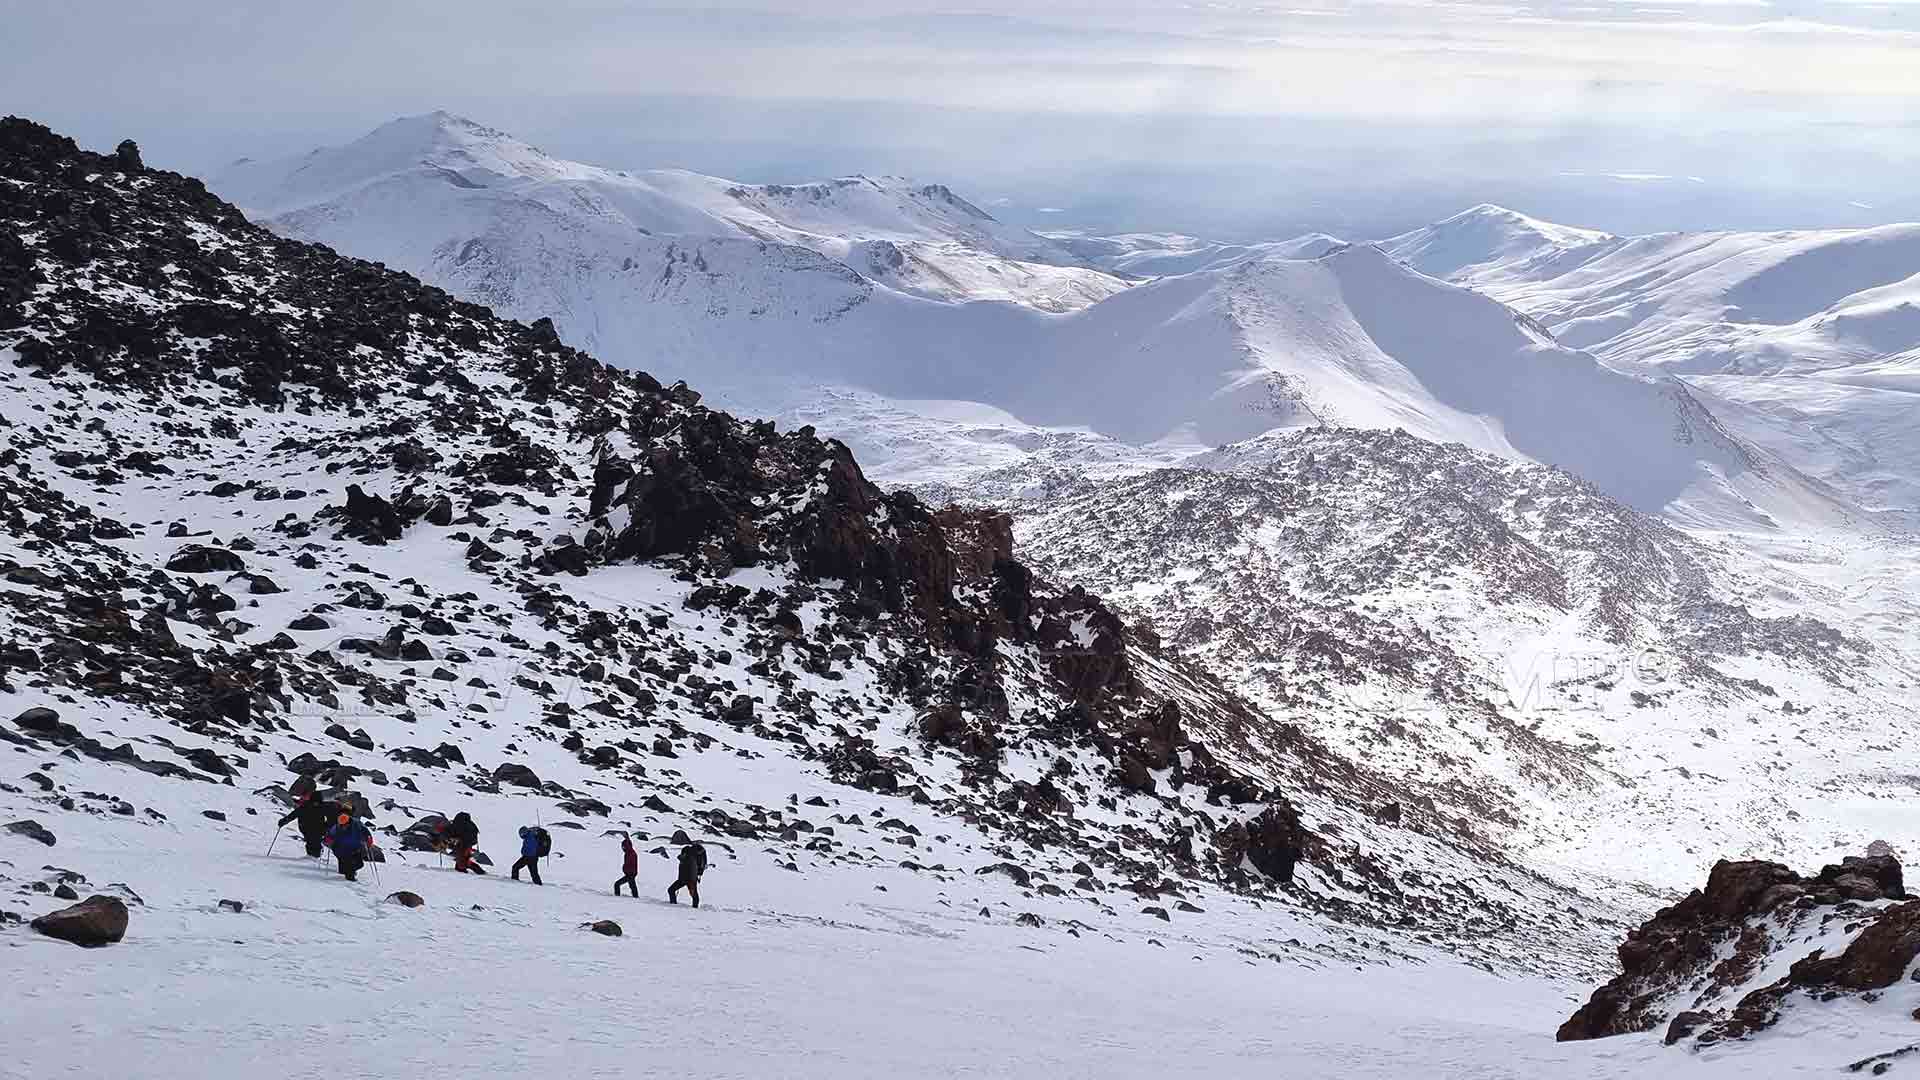 Climbing Mount Damavand in deep snow